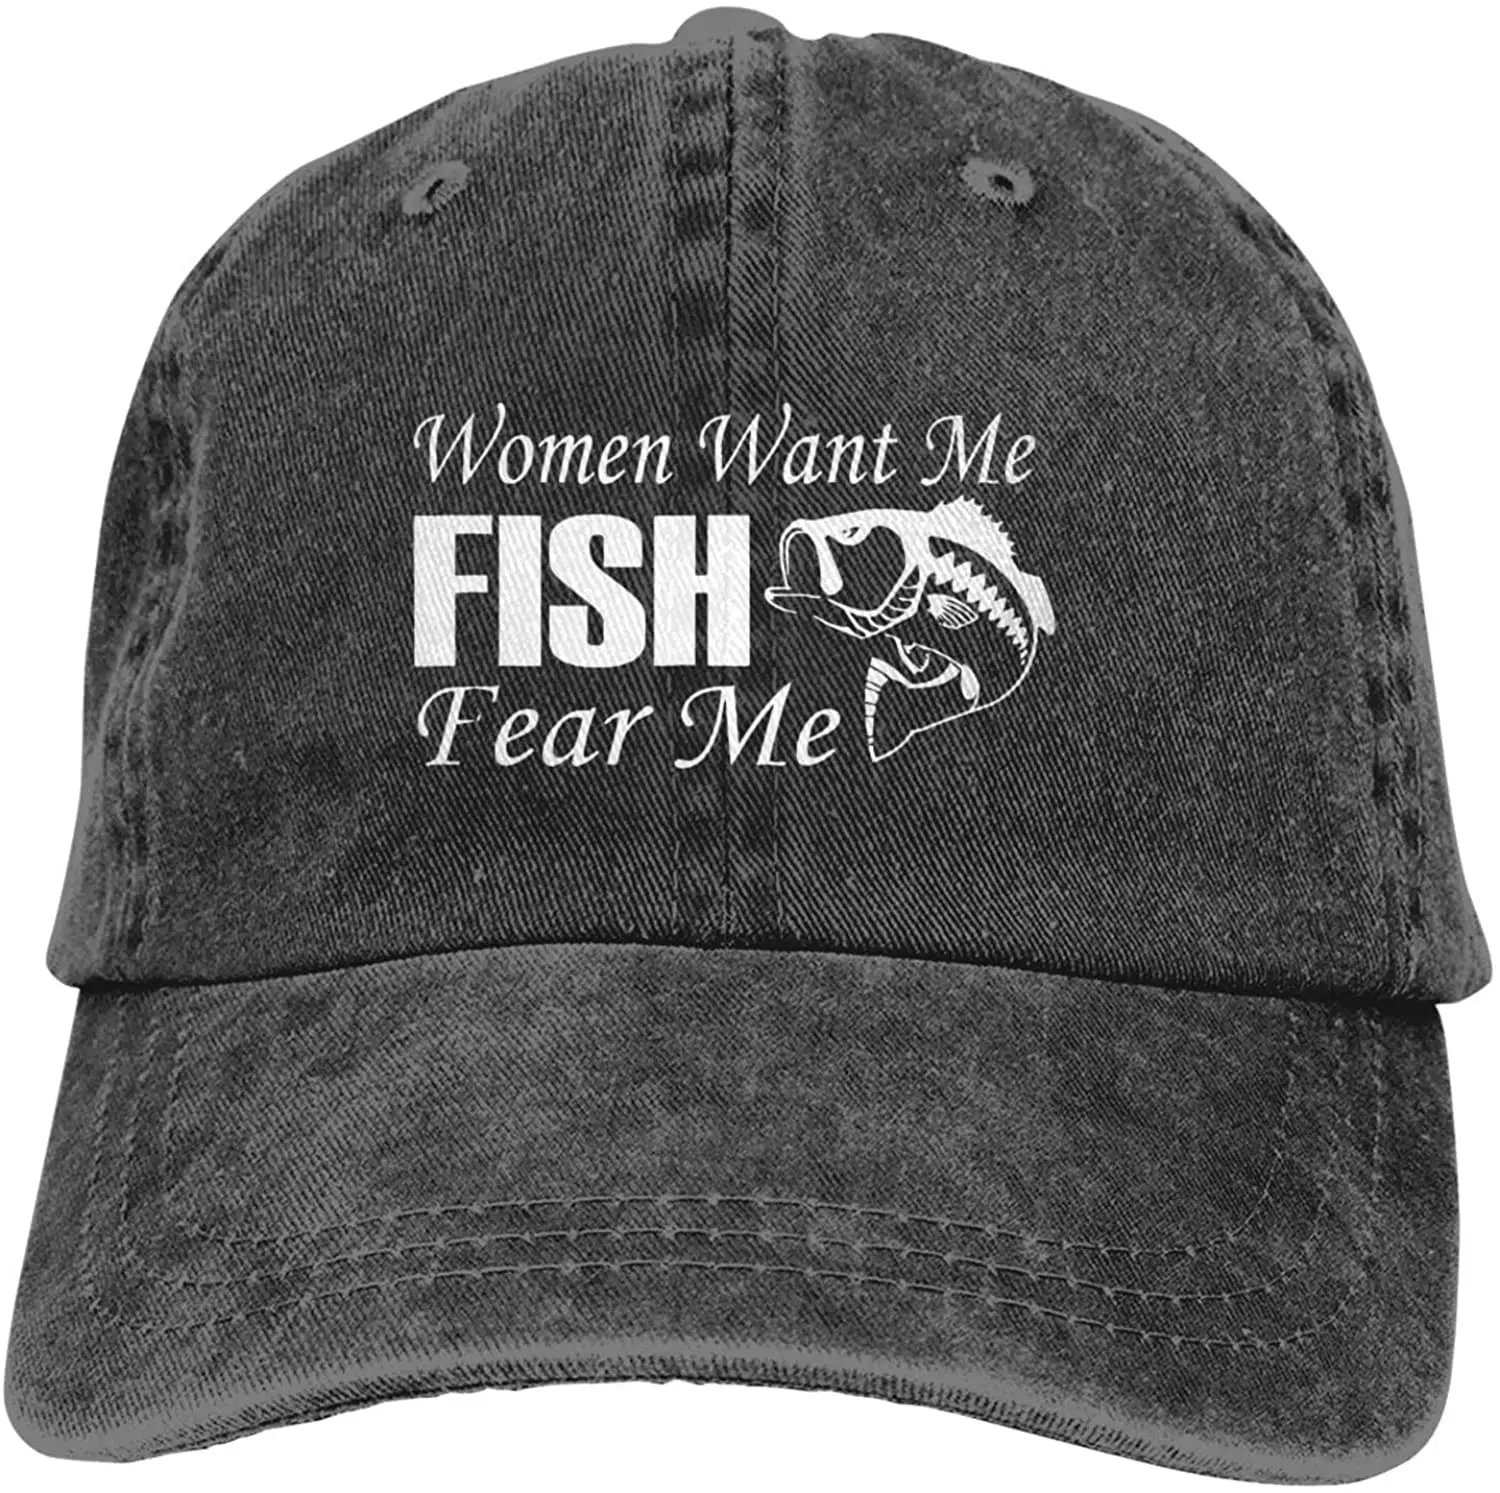 Women Want Me Fish Fear Me Unisex Denim Baseball Cap Adjustable Cotton Dad Hat Personality Daily Leisure Sun Hat